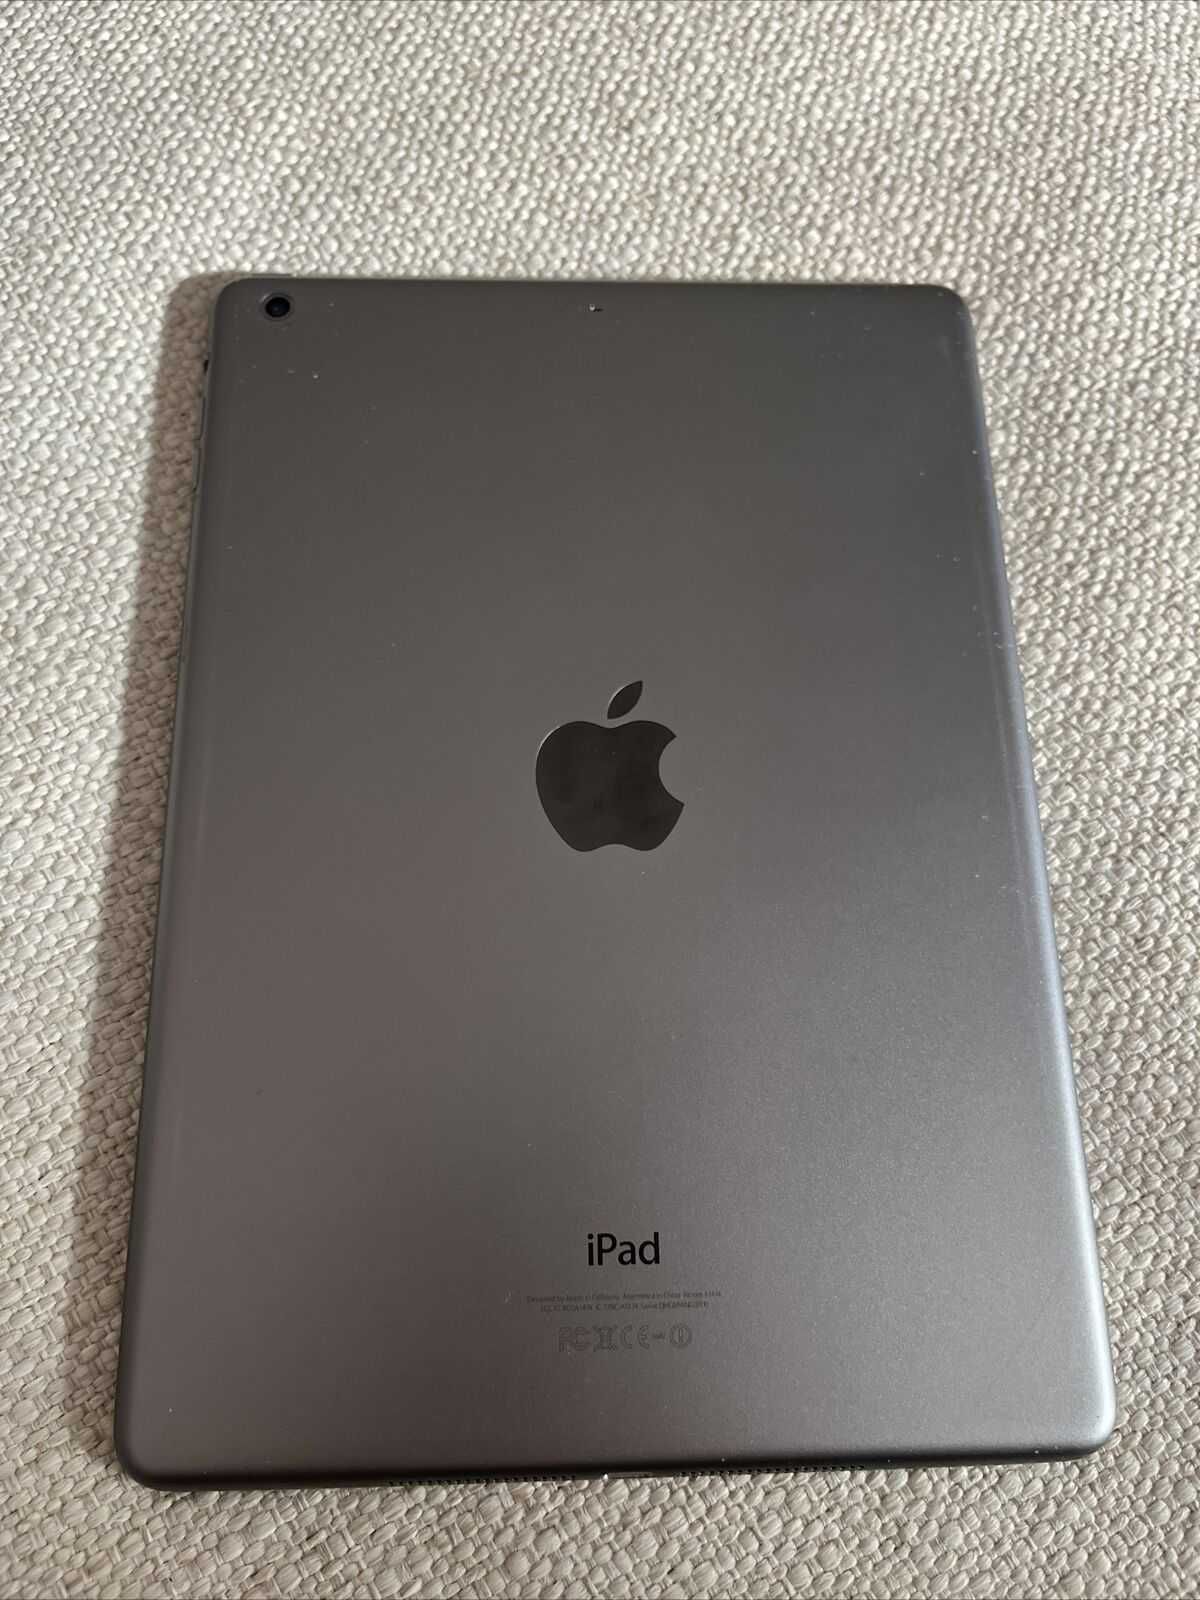 Apple iPad Air 16GB Wi-Fi 9.7 Space Grey a1474